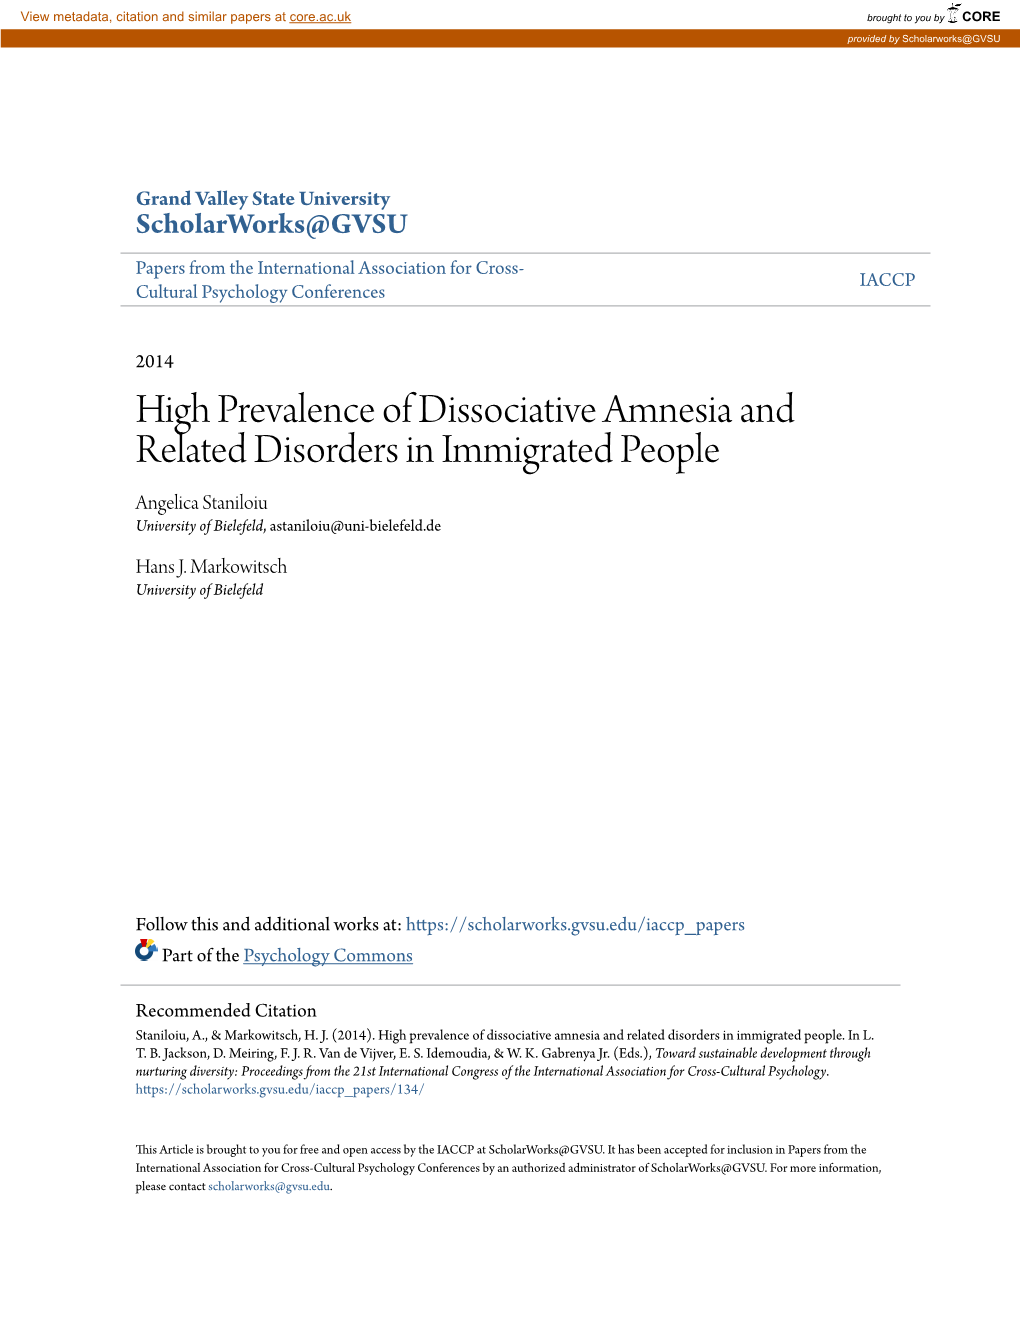 High Prevalence of Dissociative Amnesia and Related Disorders in Immigrated People Angelica Staniloiu University of Bielefeld, Astaniloiu@Uni-Bielefeld.De